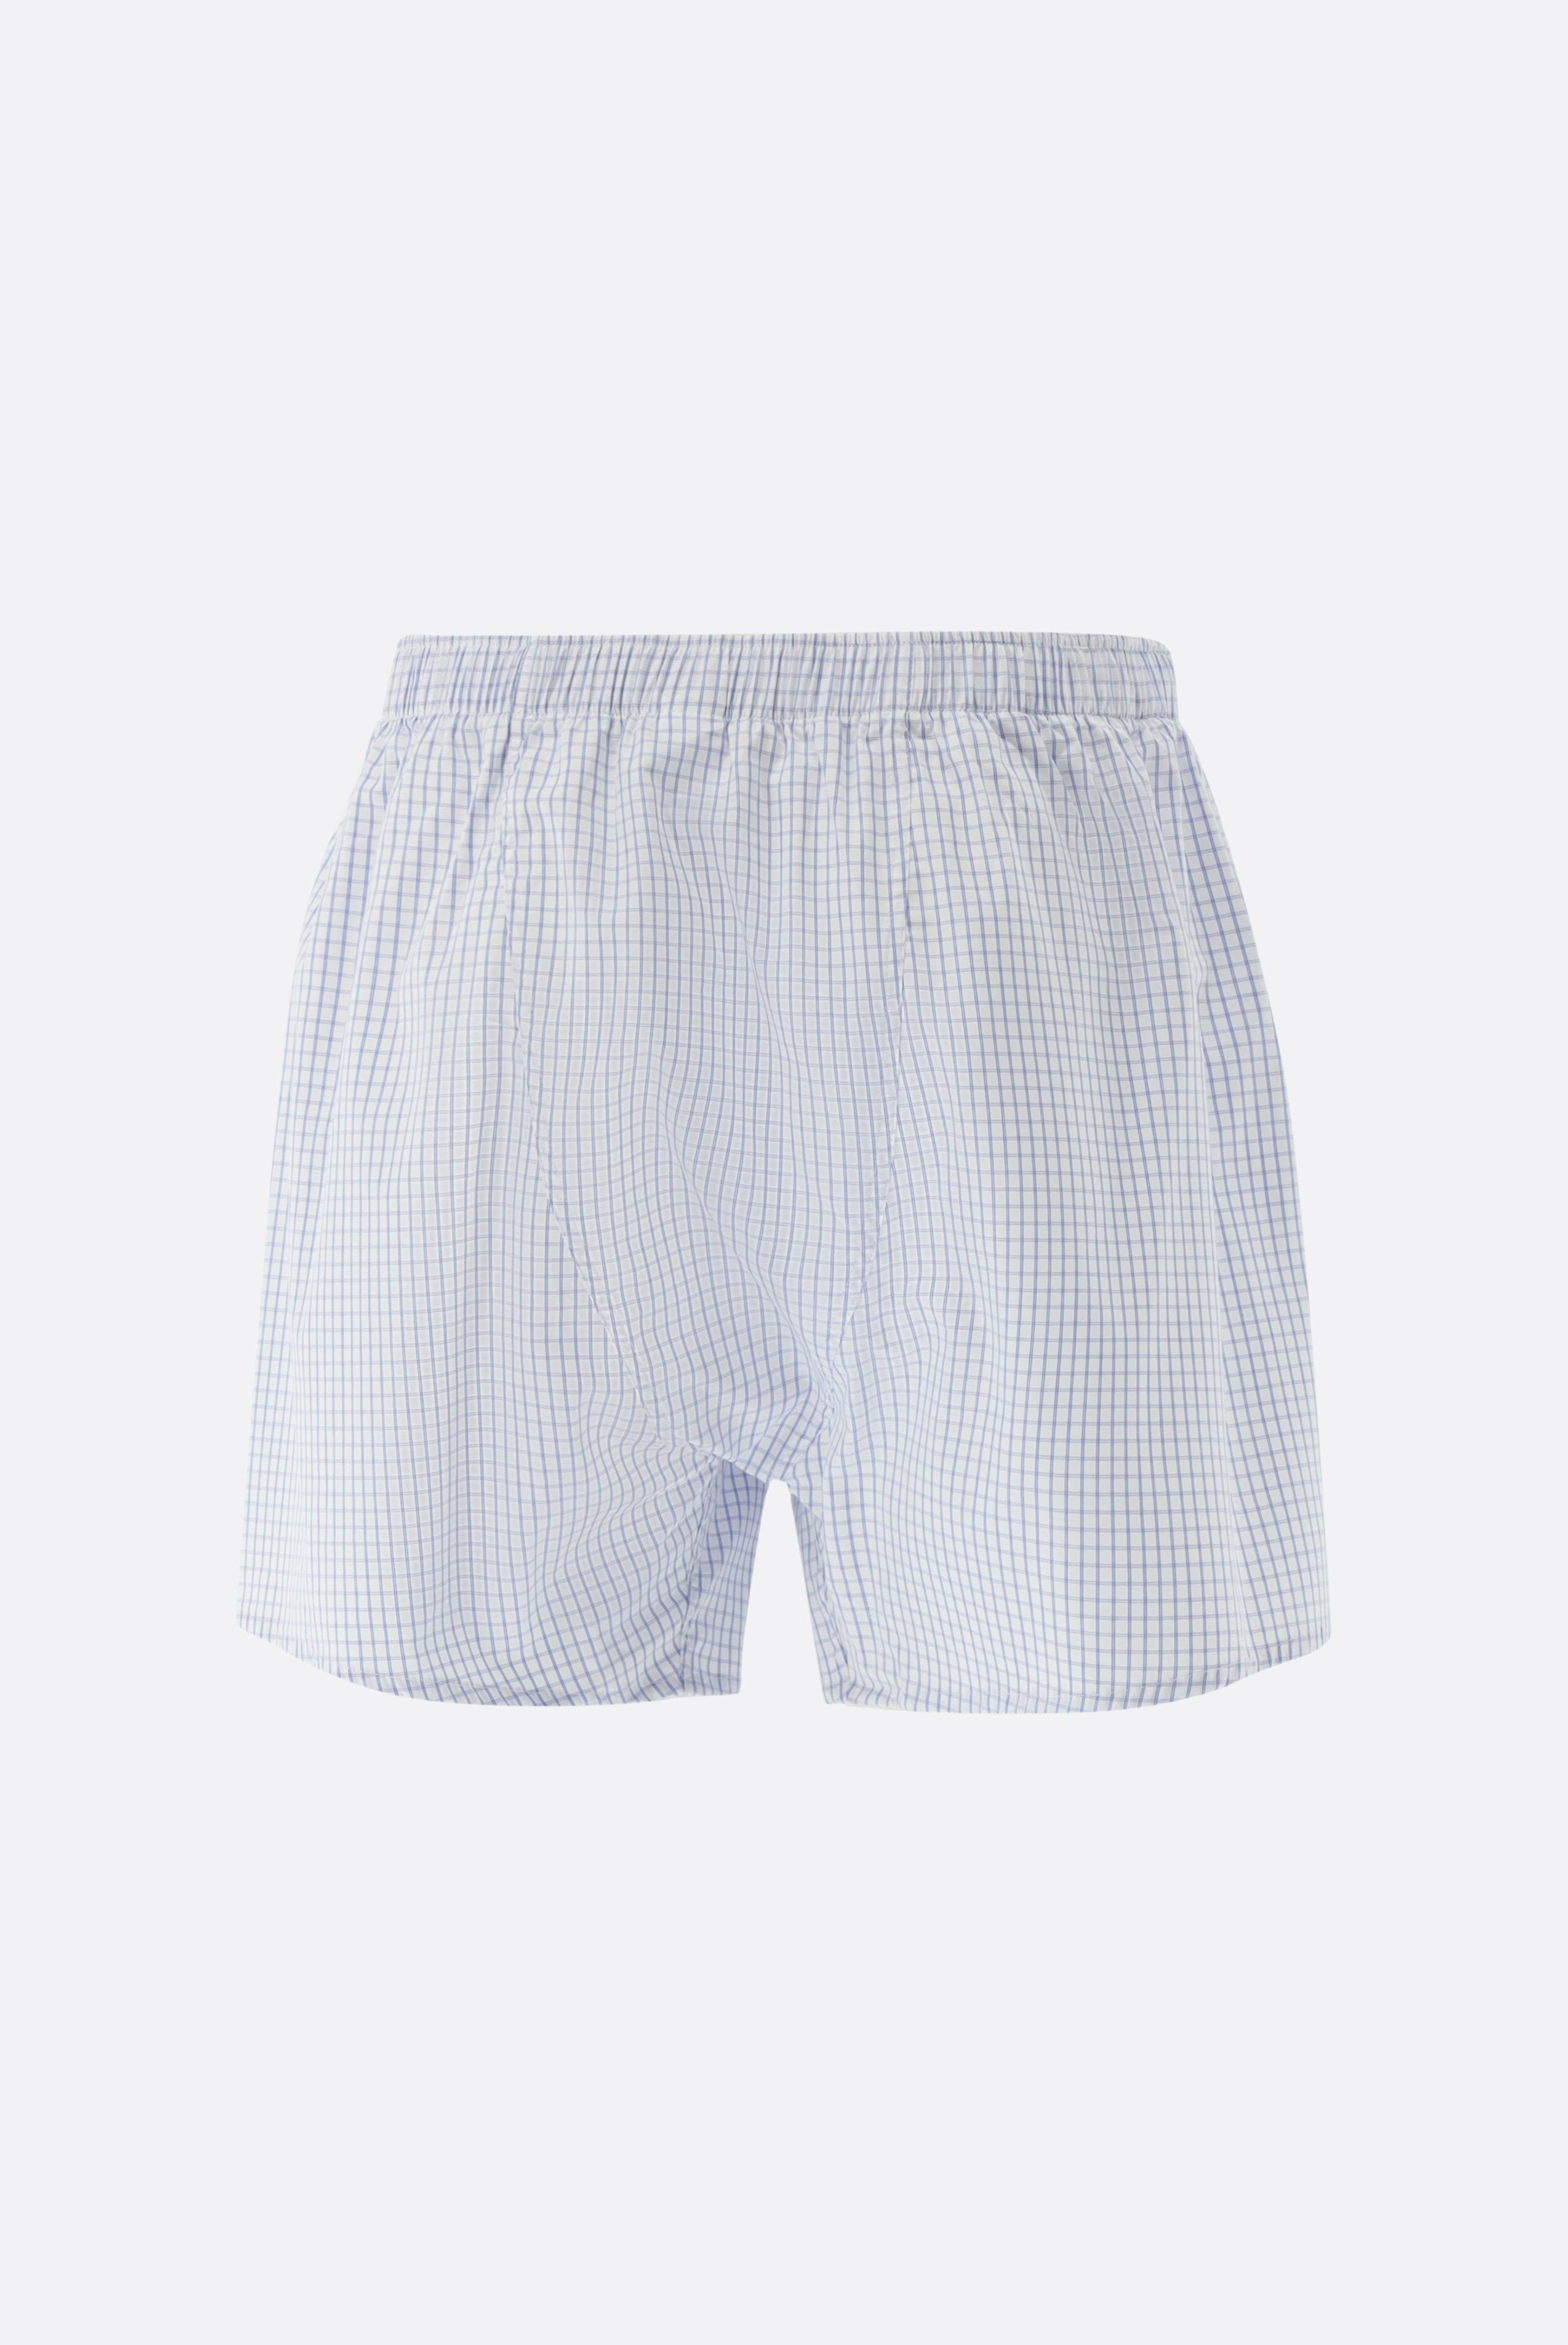 Underwear+Striped Poplin Boxer Shorts+91.1100..151046.730.46